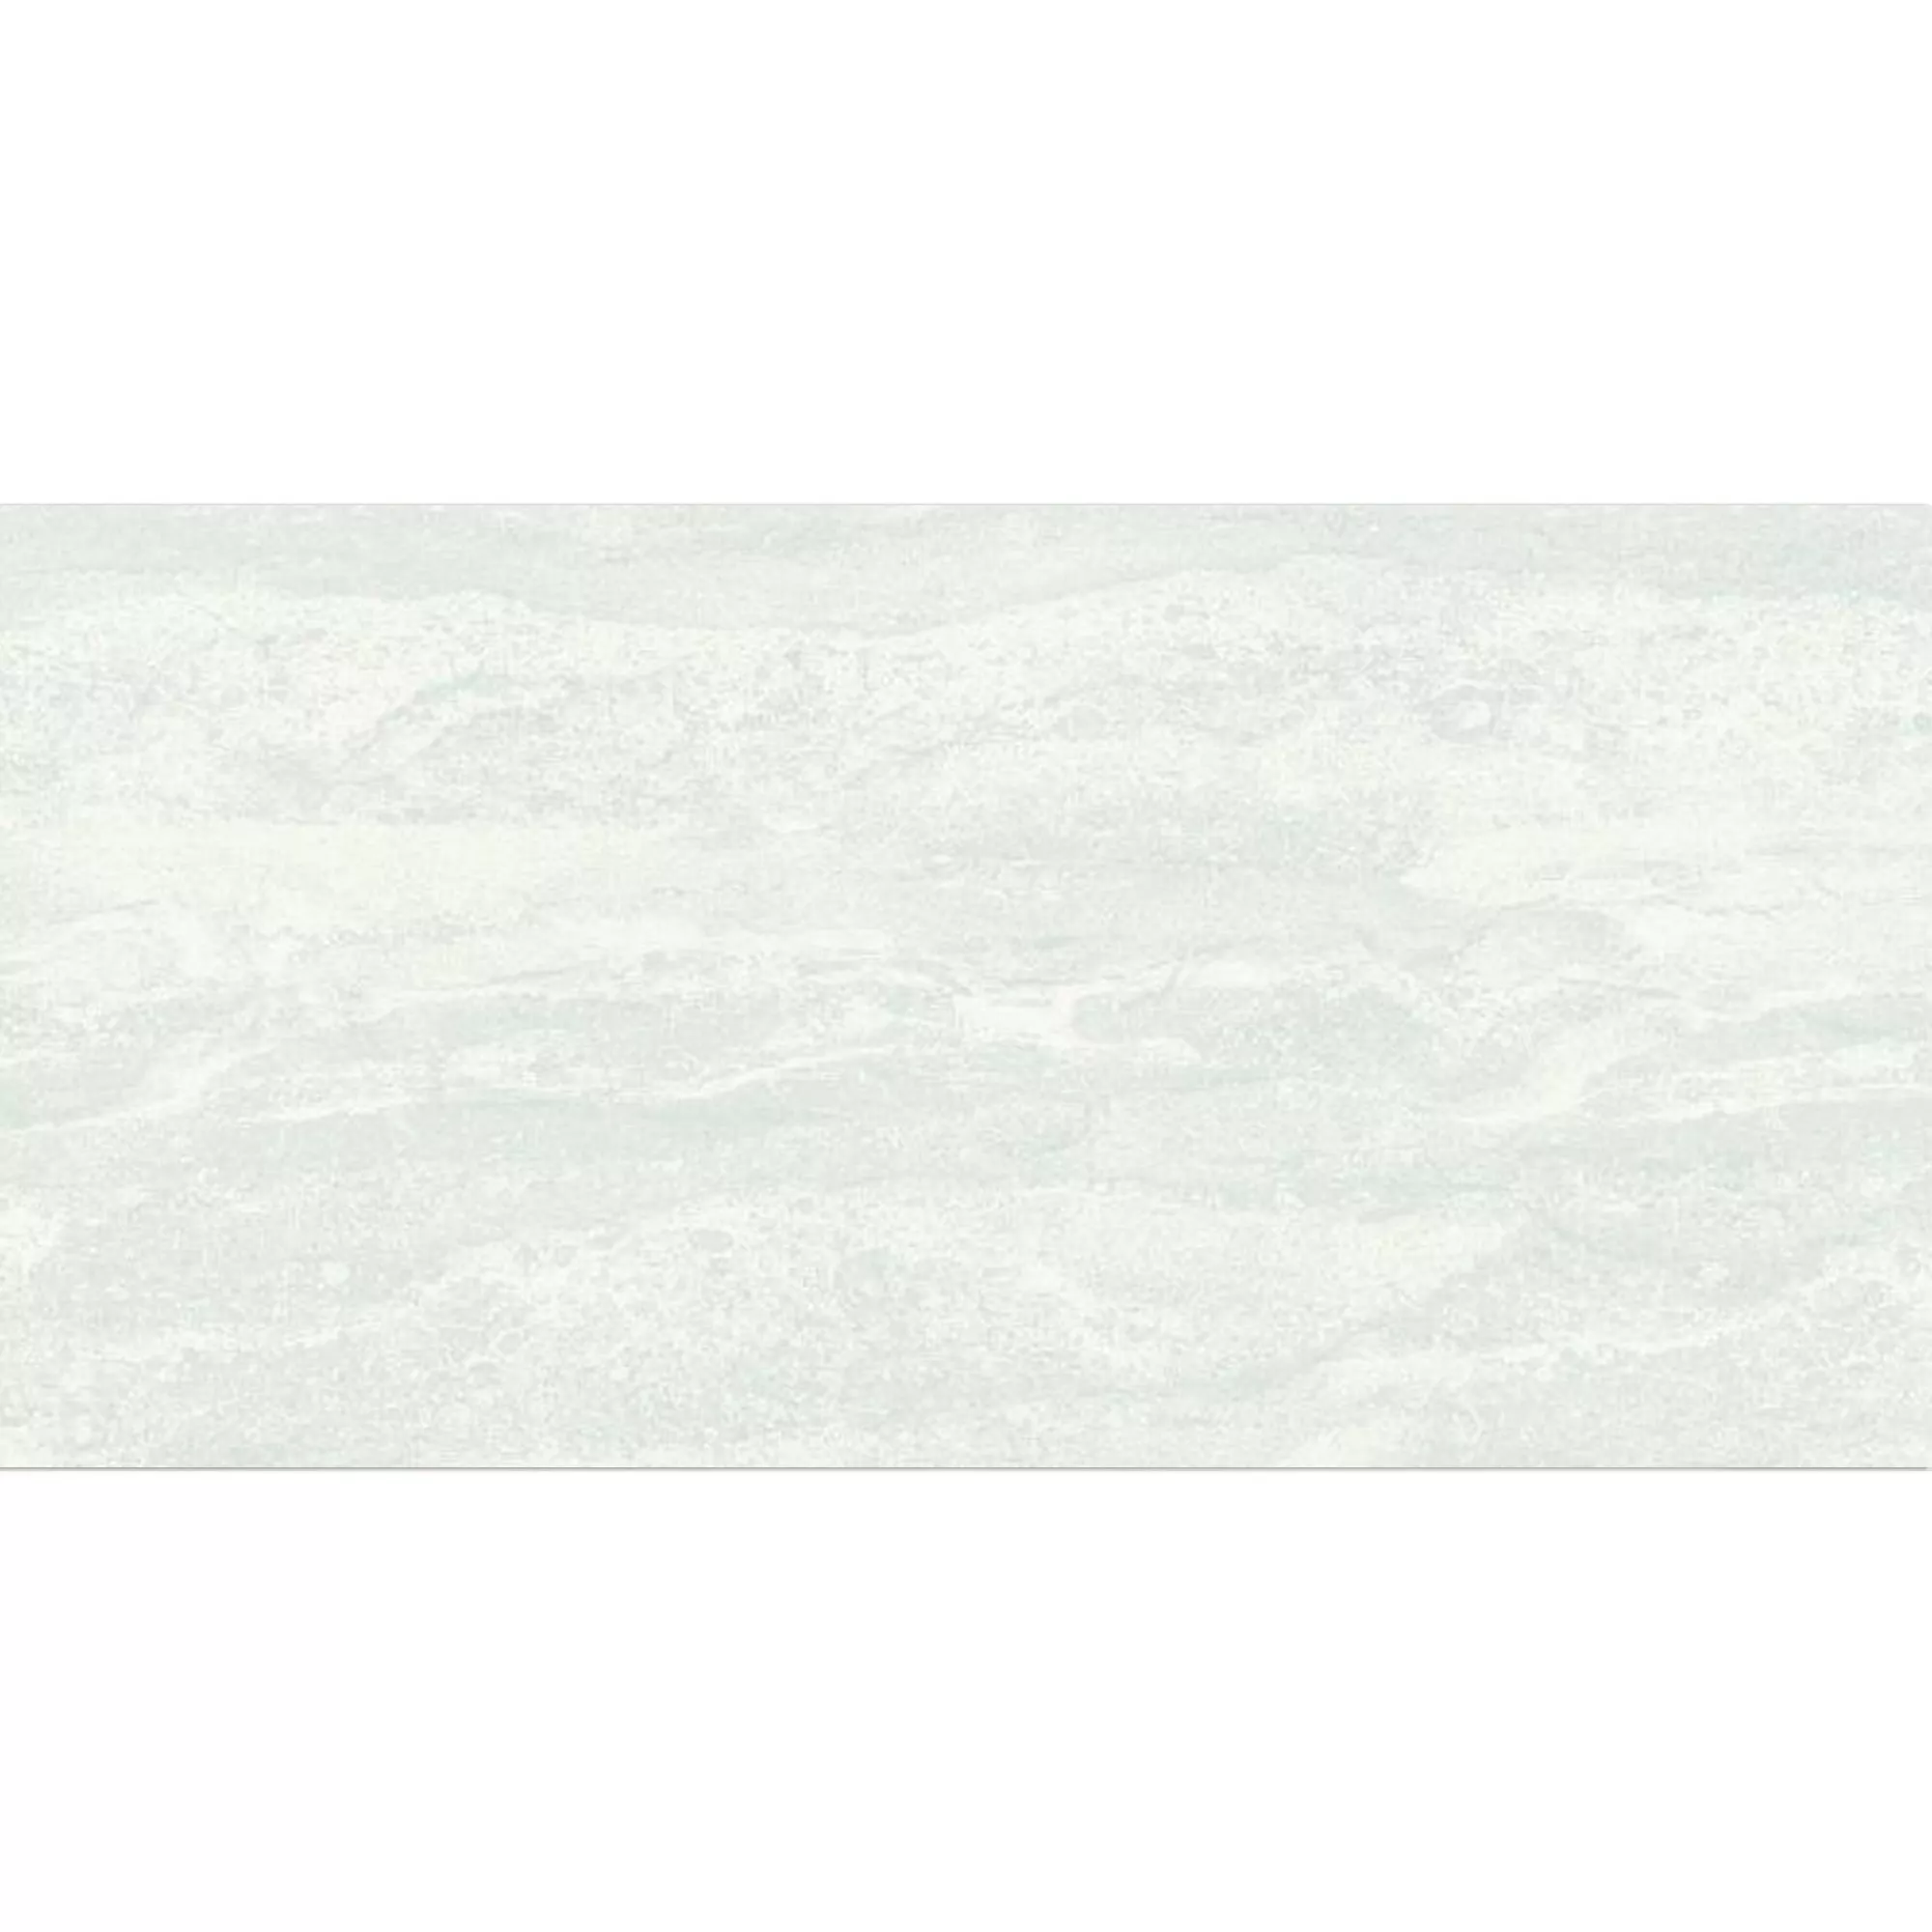 Wandfliese Bellinzona Creme Strukturiert 30x60cm